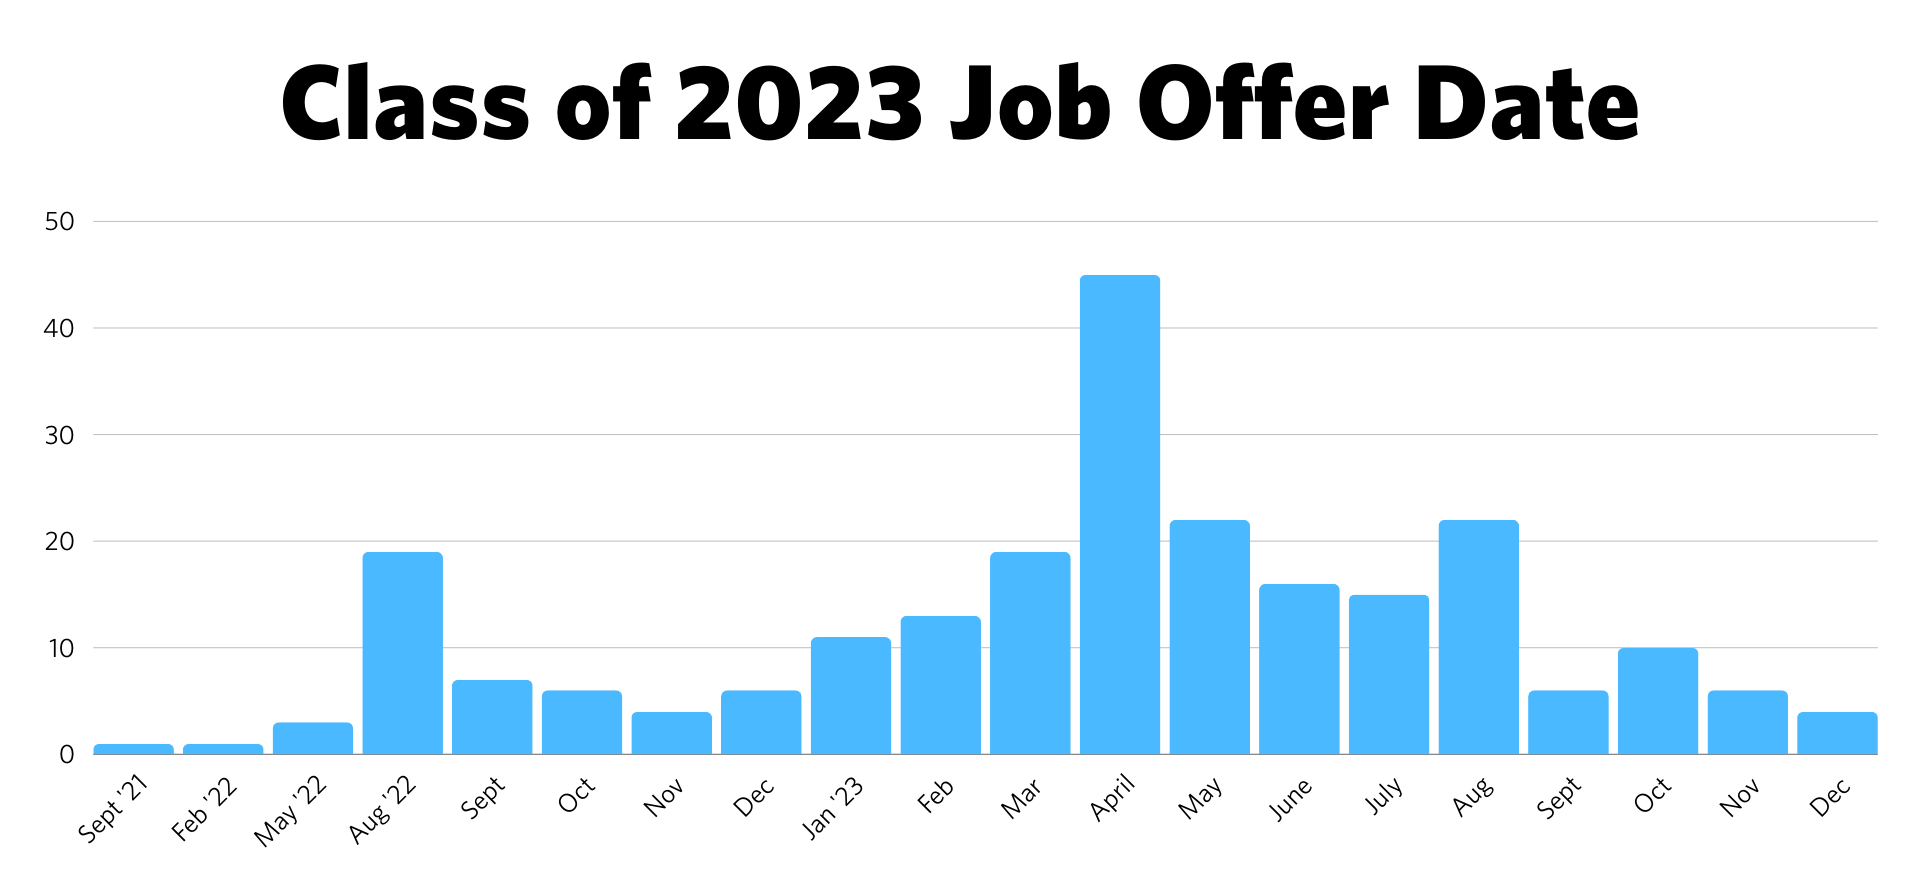 A graph depicting Class of 2023 job offer dates. 